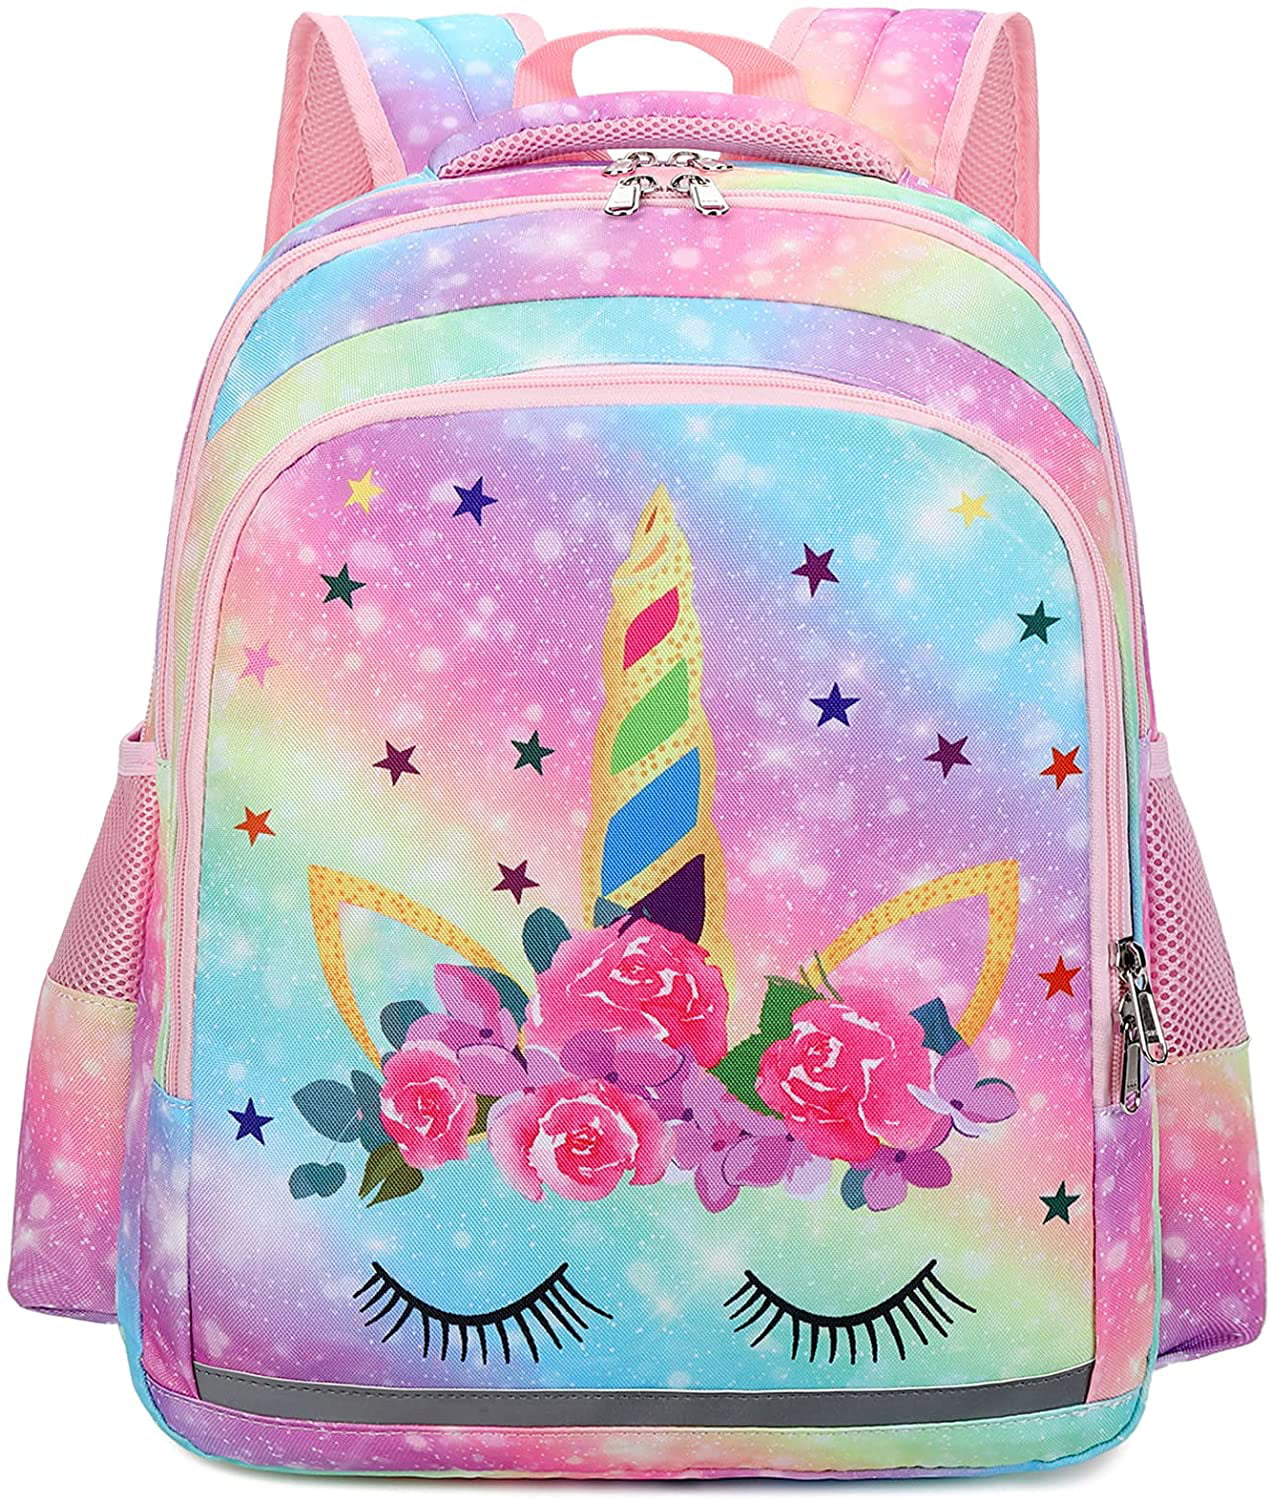 Girls Backpack for School Kids Backpack Preschool Kindergarten Elementary Bookbag Unicorn-Rainbow 